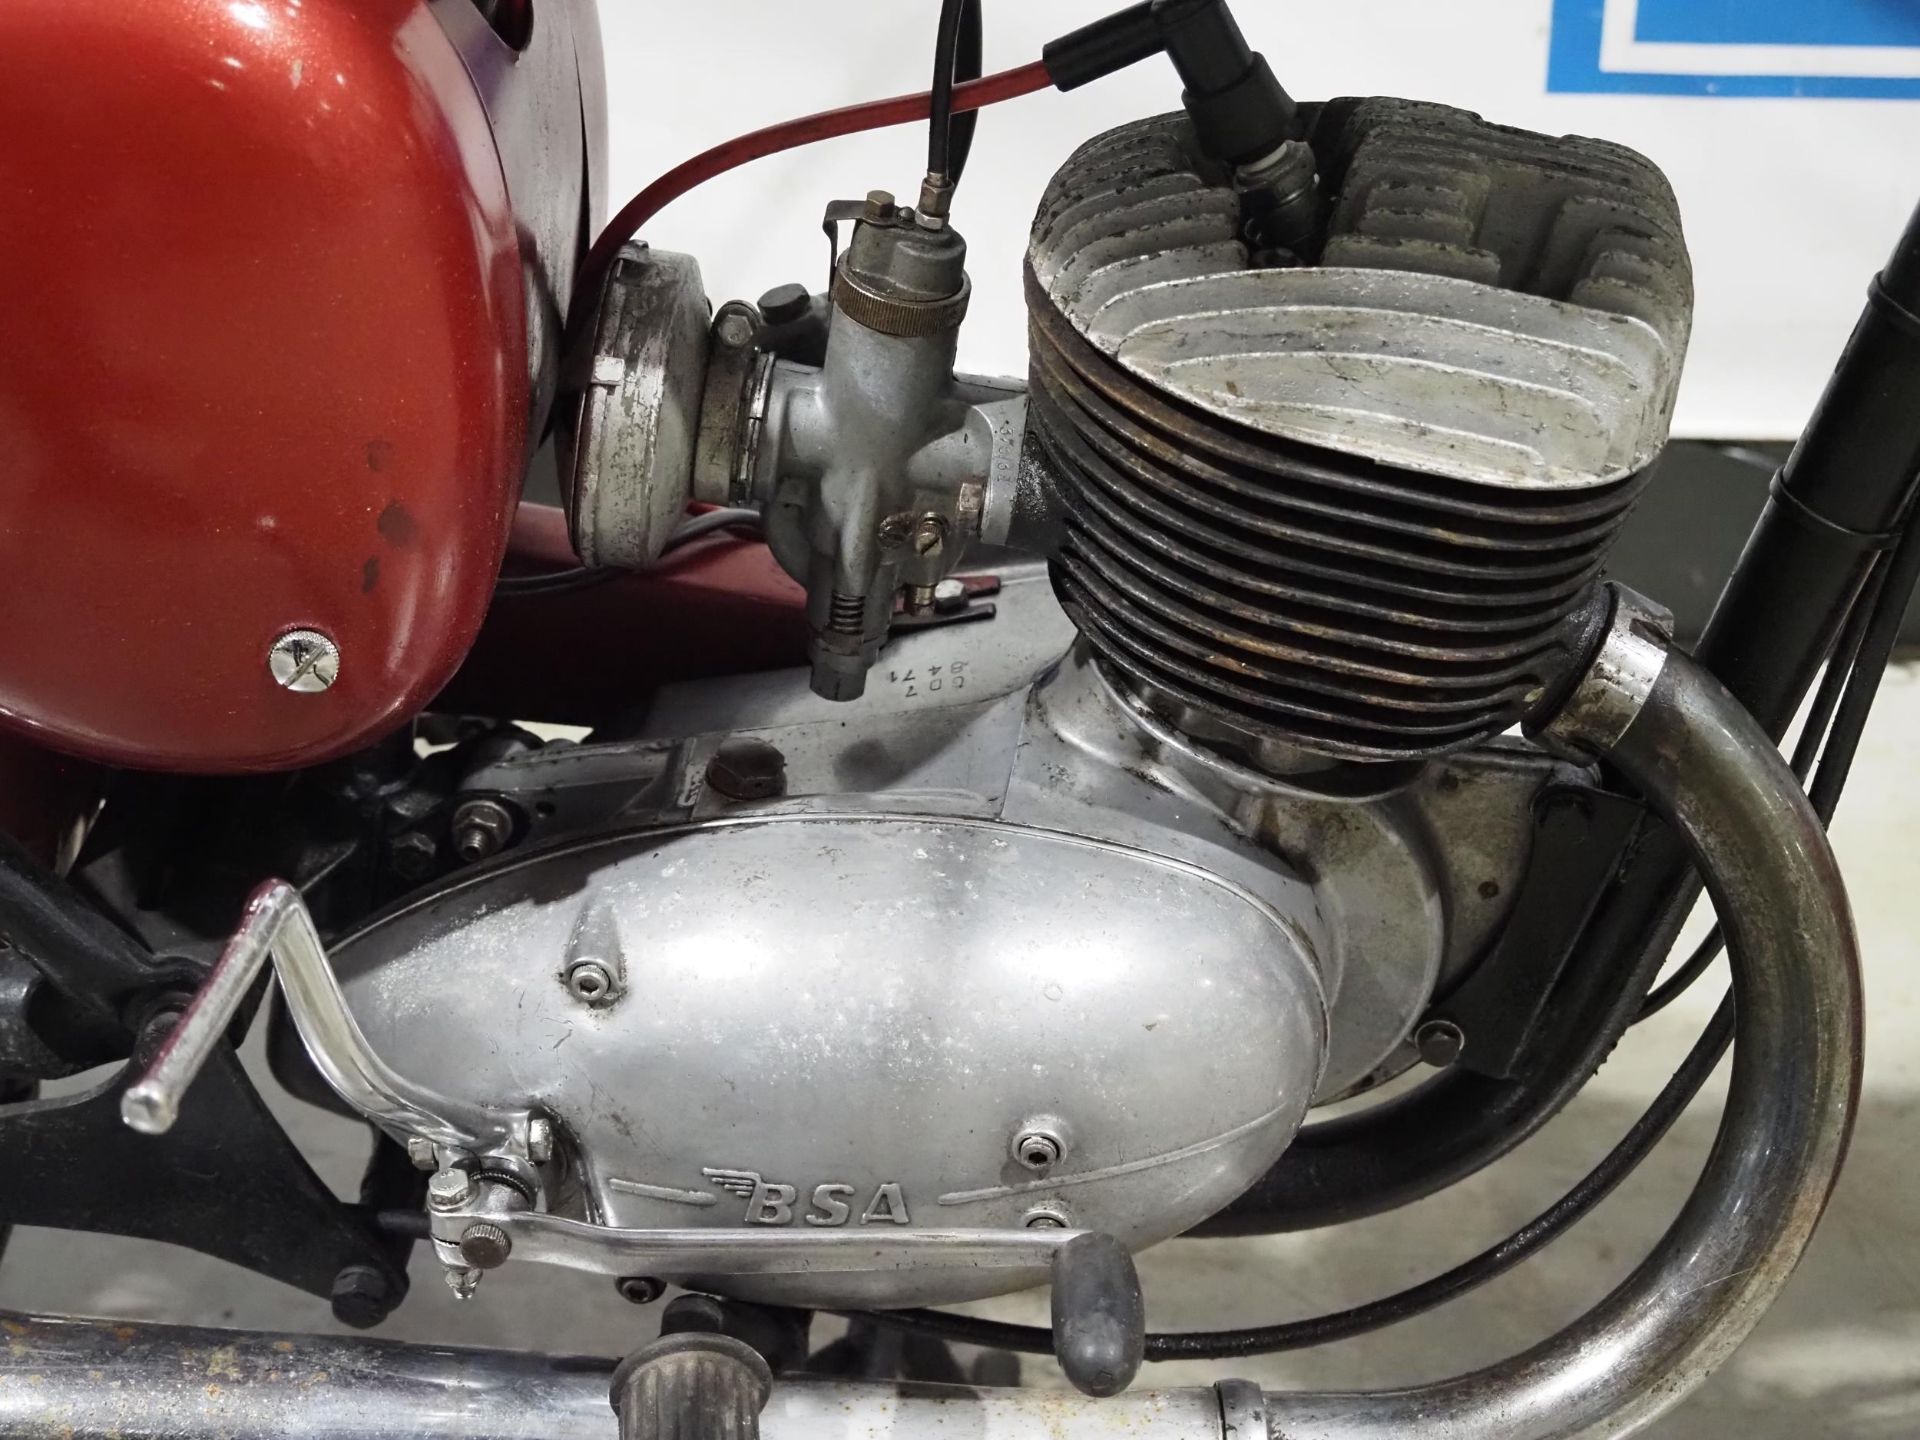 BSA Bantam 175cc motorcycle project. 1970. Frame No. ND06478B175. Engine No. GD78471. Runs but needs - Image 4 of 6